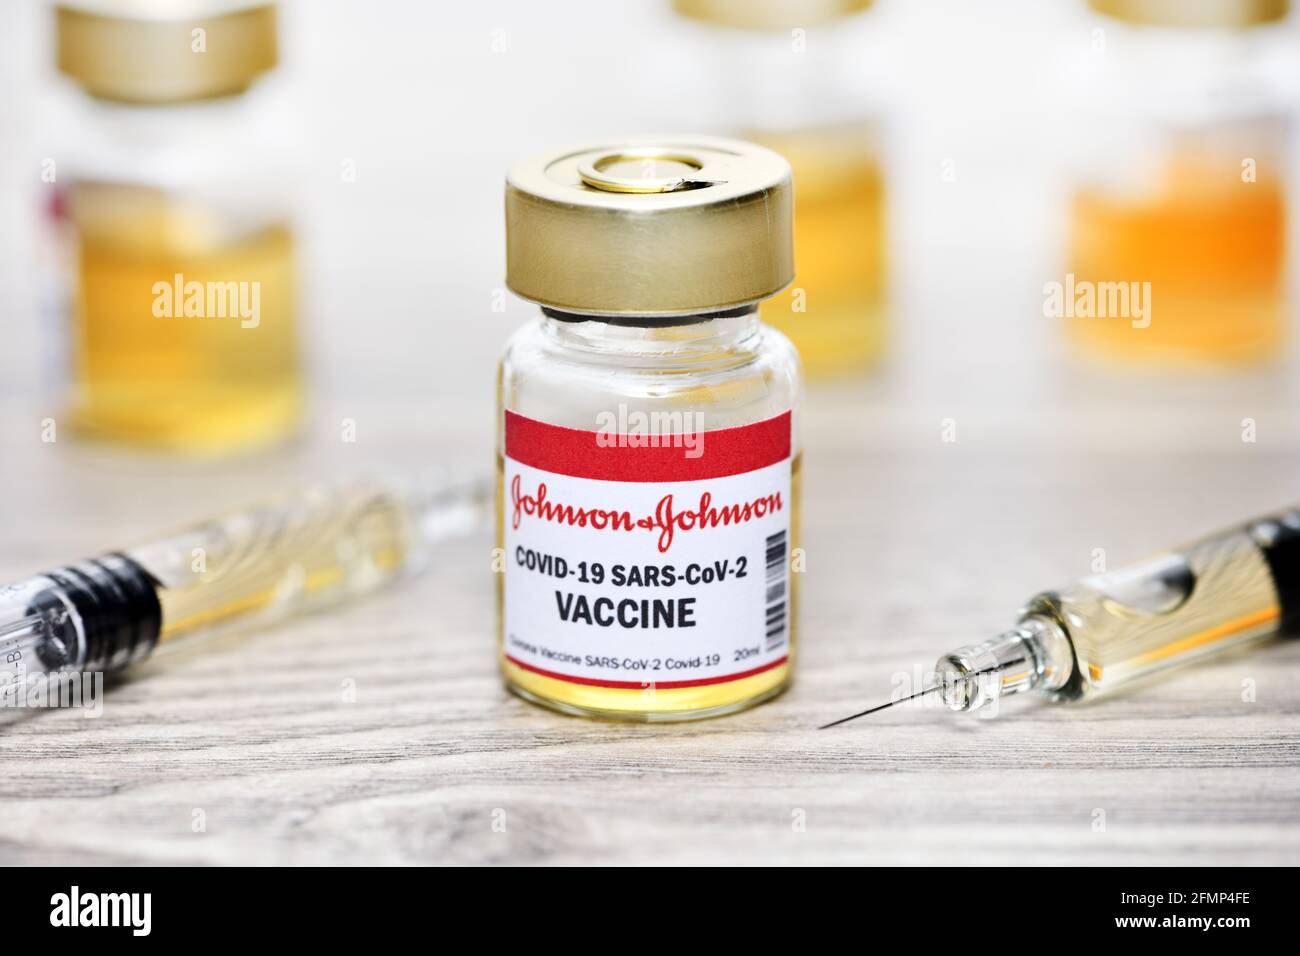 Covid Vaccine Of Johnson And Johnson, Symbolic Image Stock Photo